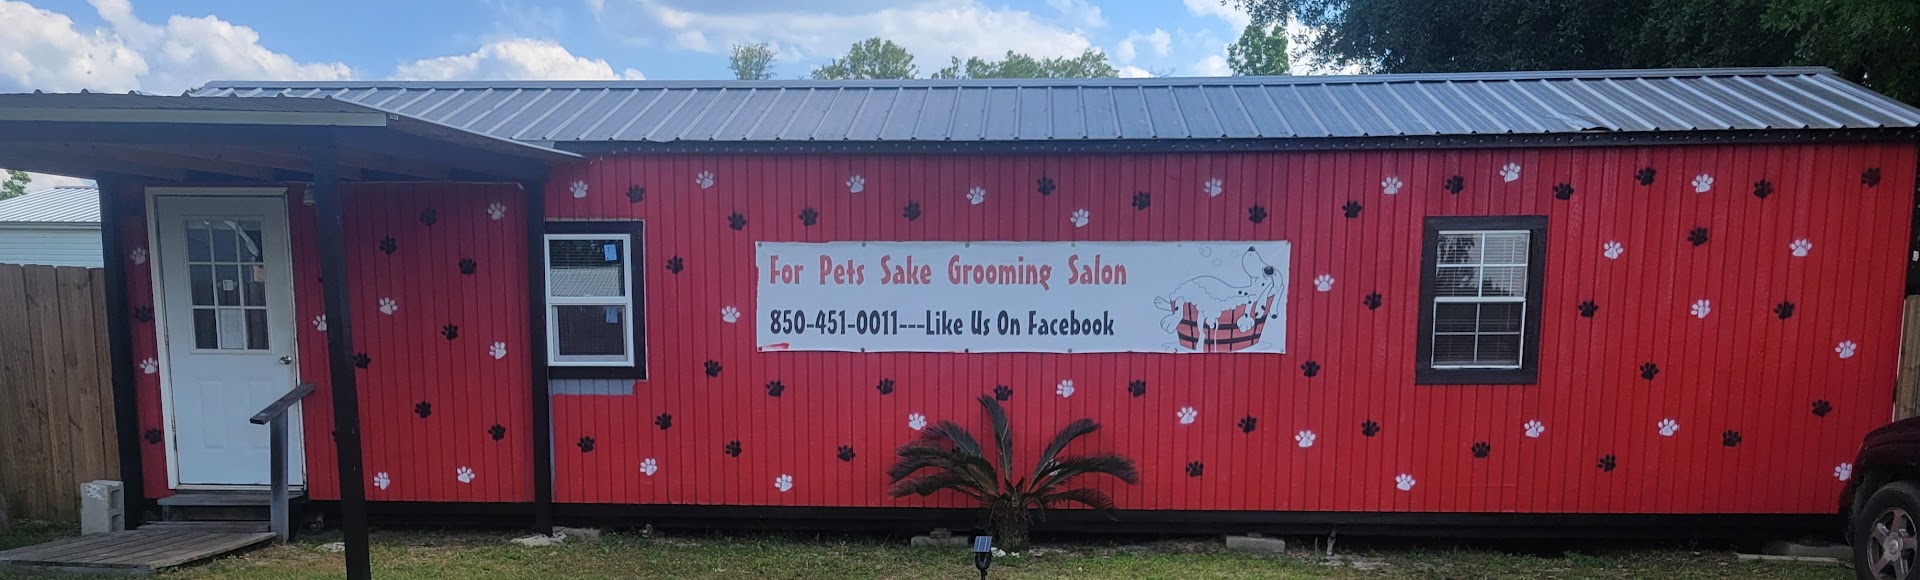 For Pets Sake Grooming Salon